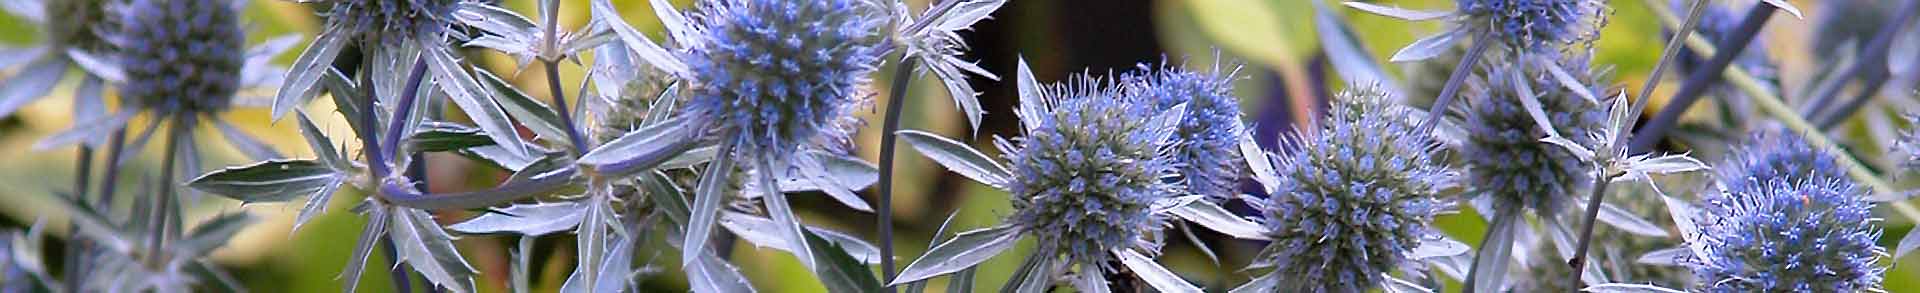 Striking, thistle-like, silvery and cobalt-blue-tinted Eryngium flowerheads in a summer garden border.